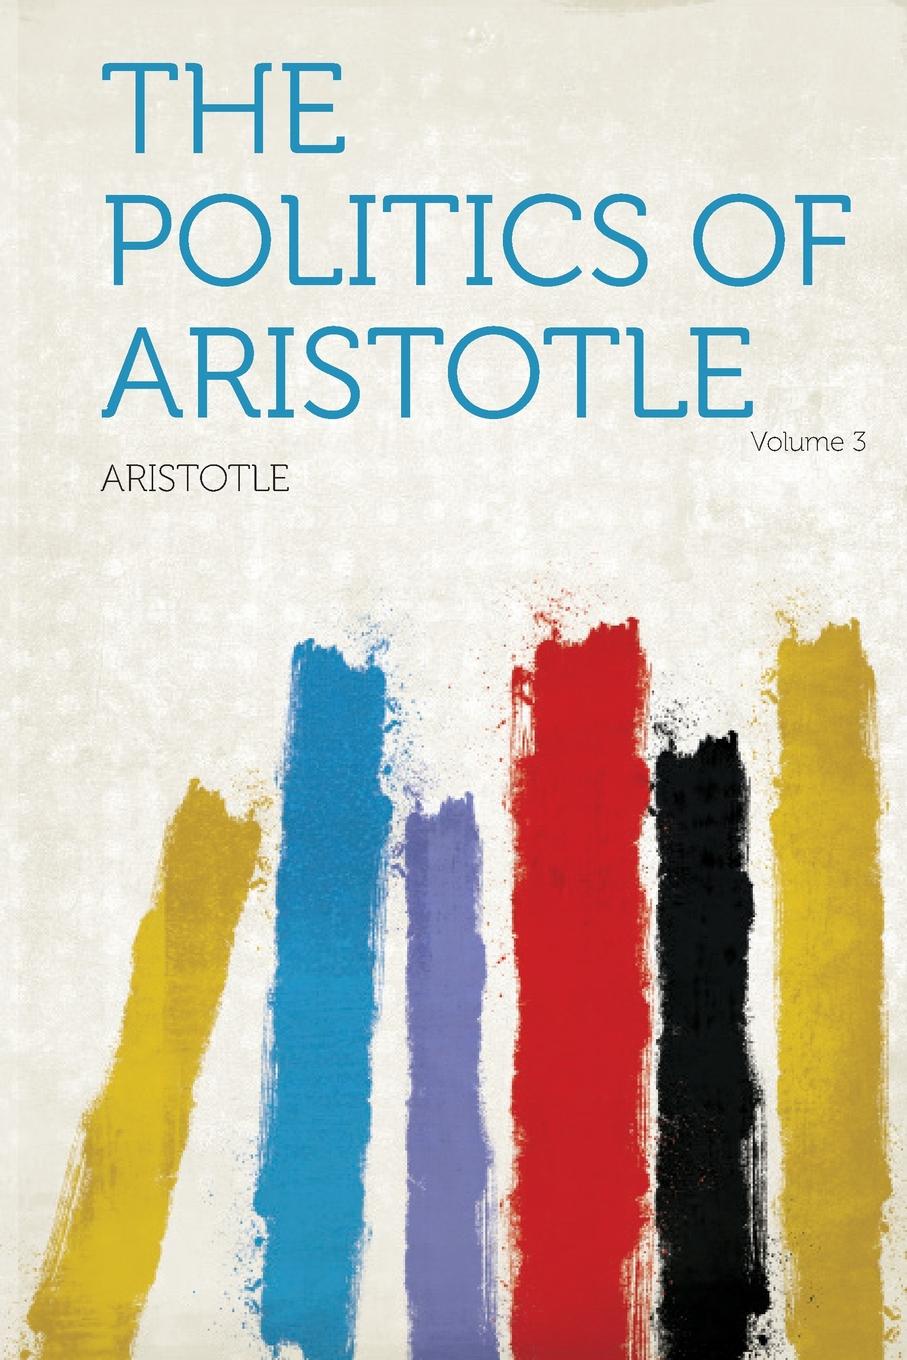 The Politics of Aristotle Volume 3